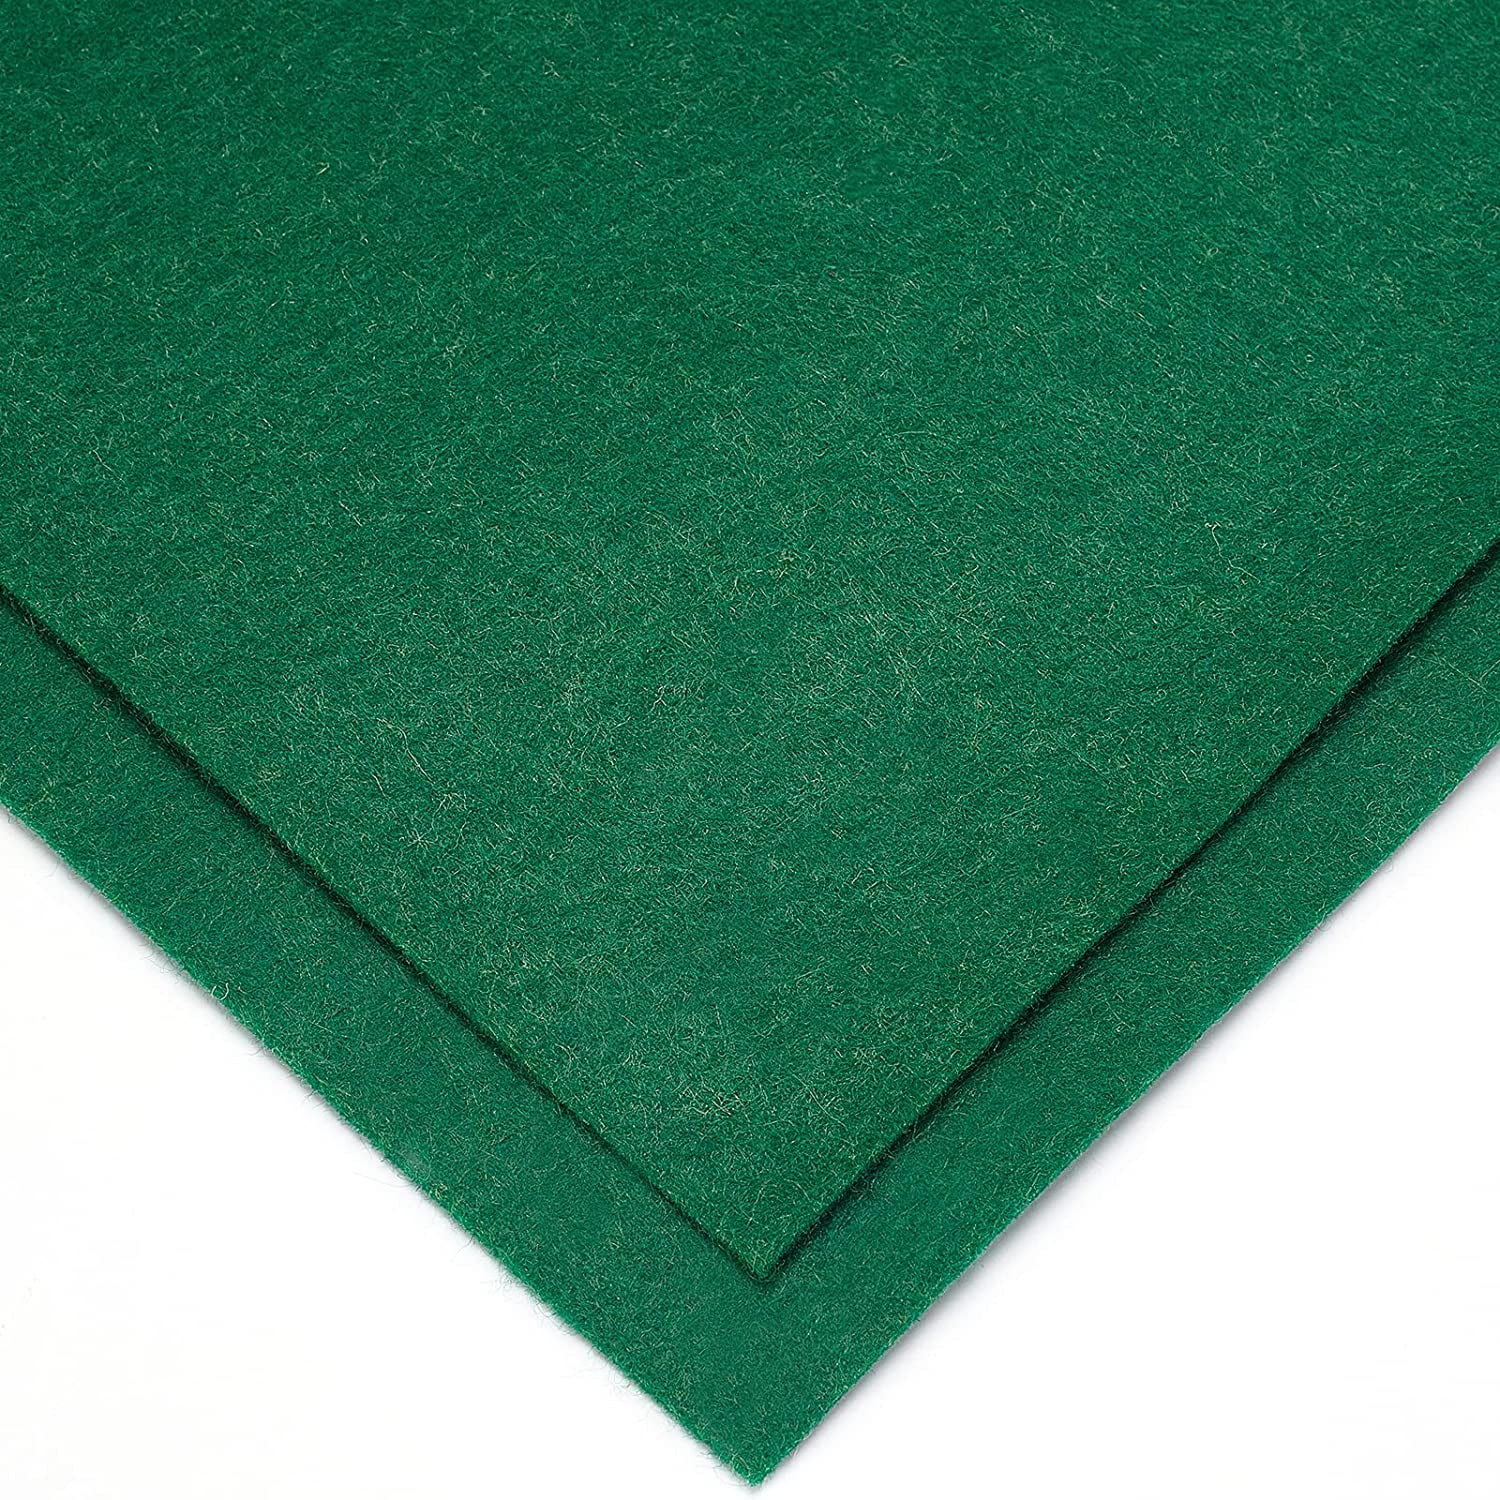 CMCYILING Green Felt Sheets 1 MM Thicknes, Non-Woven Fabric